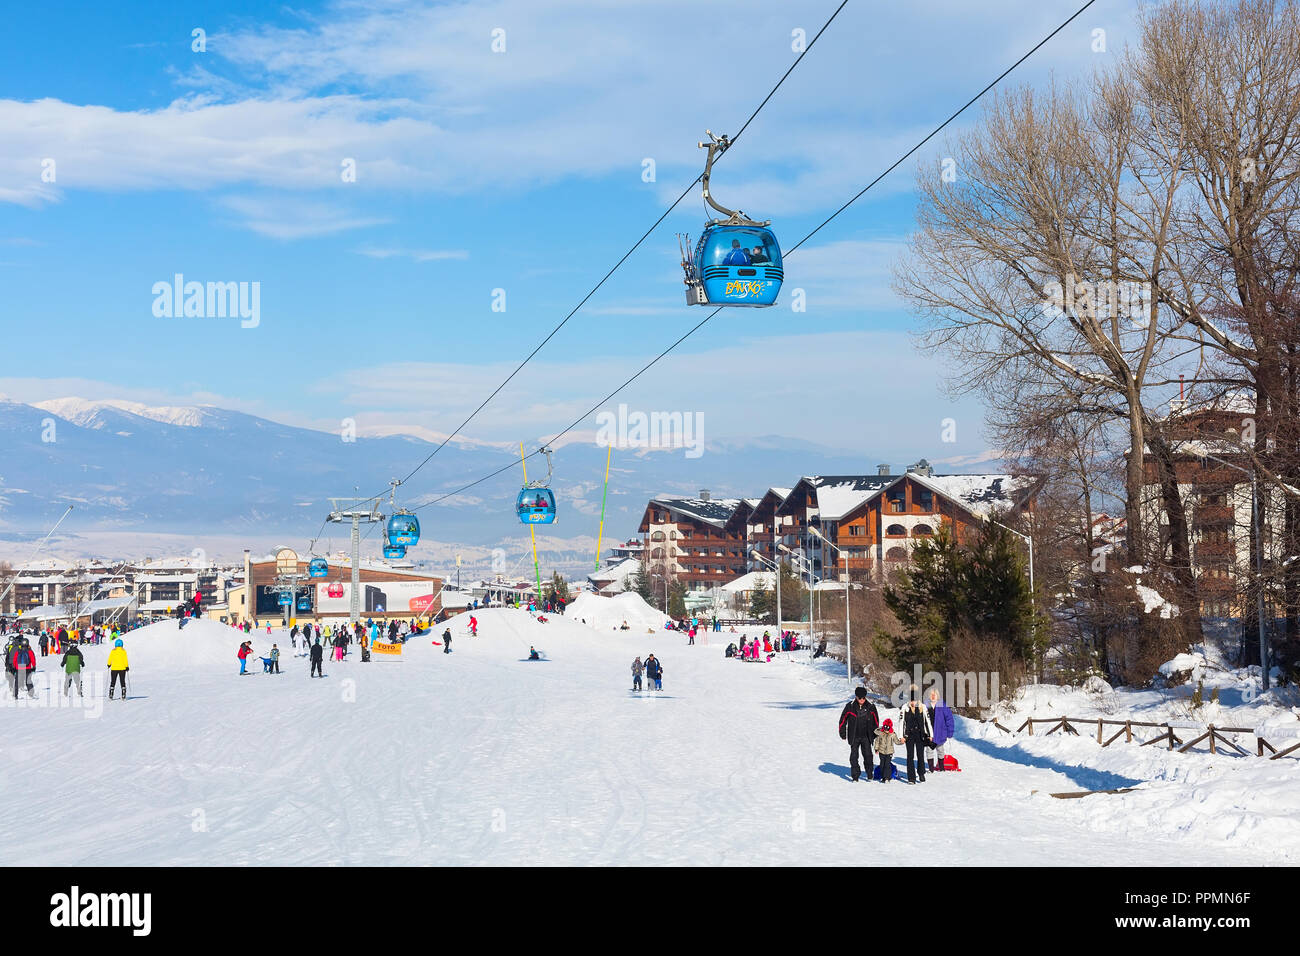 Bansko, Bulgaria - January 13, 2017: Winter ski resort Bansko, ski slope,  people skiing and mountains view Stock Photo - Alamy